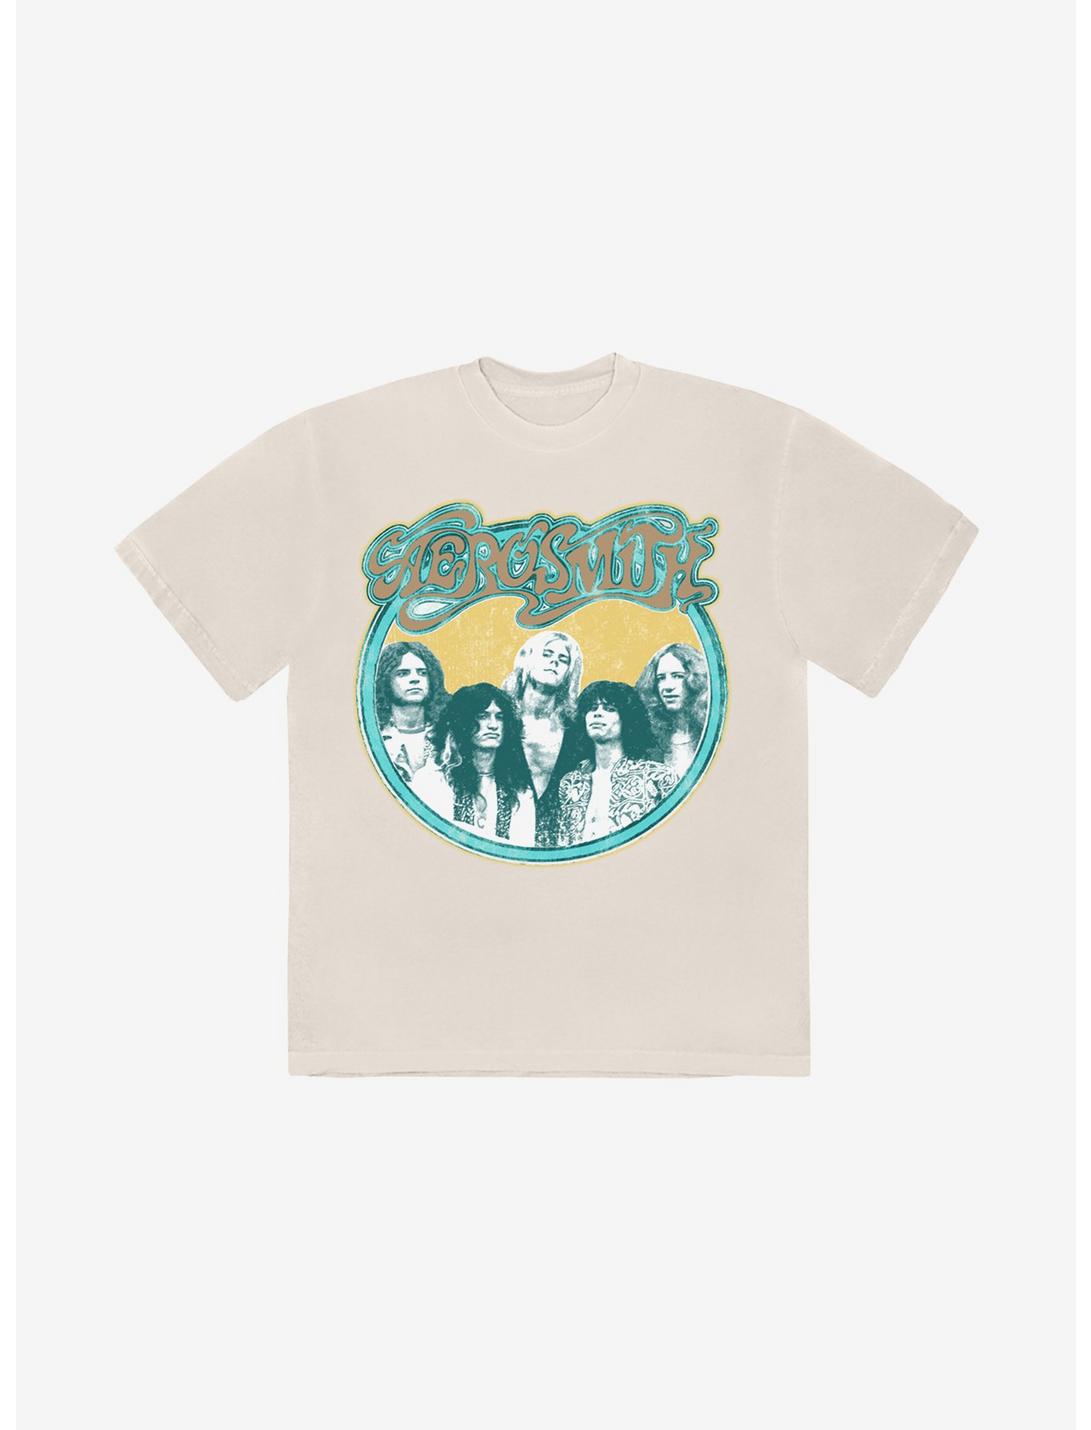 Aerosmith Group Glitter Boyfriend Fit Girls T-Shirt, CREAM, hi-res